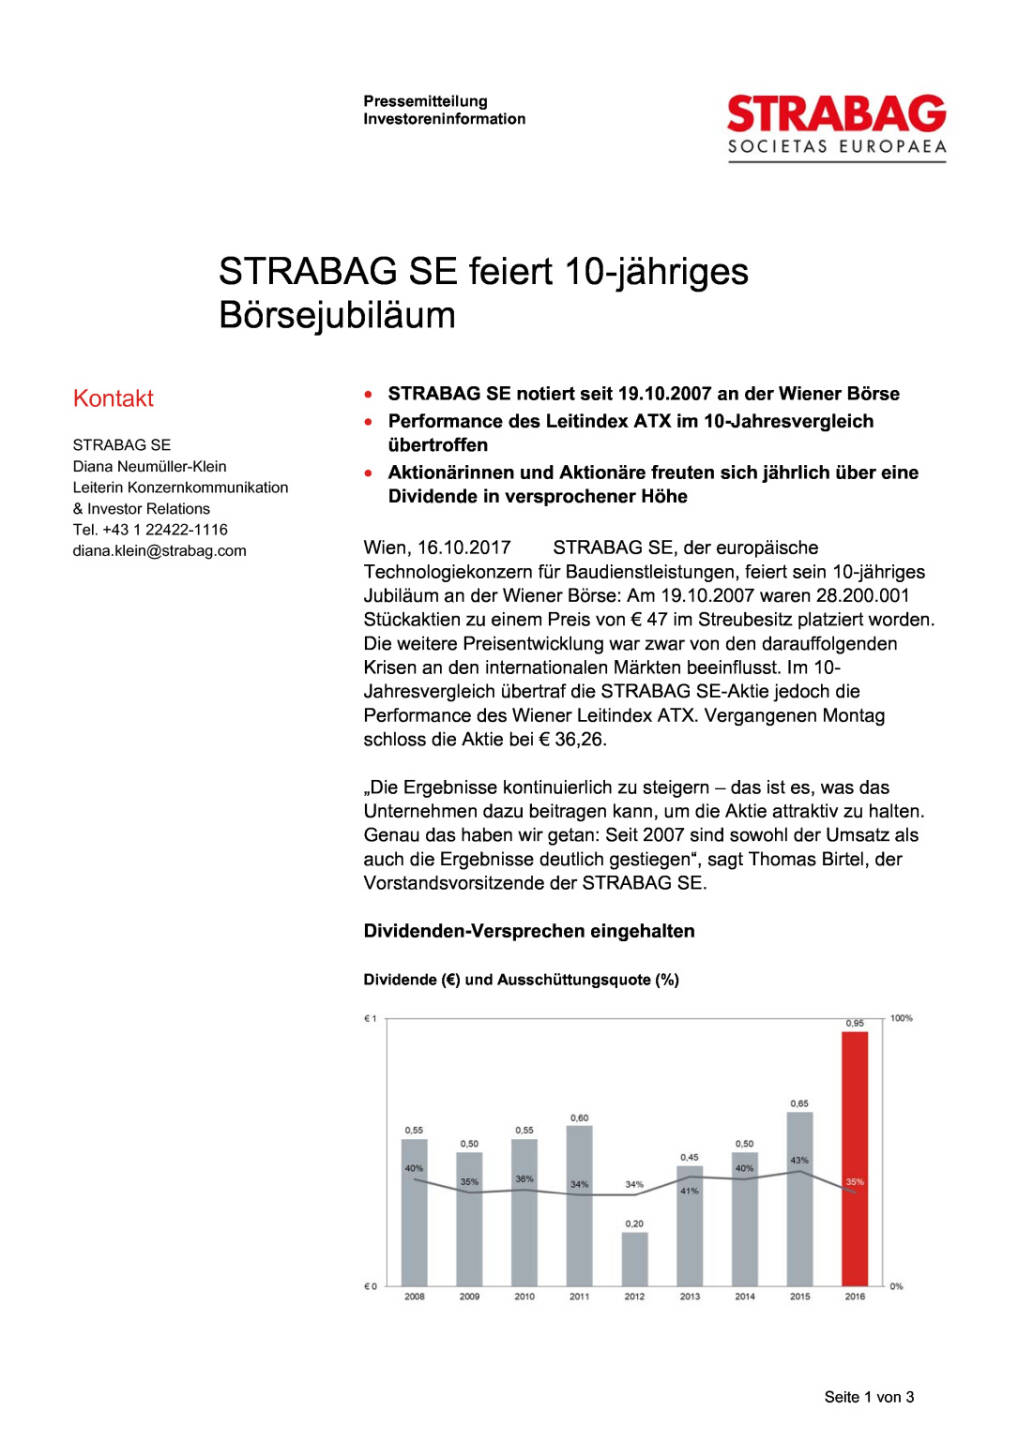 Strabag feiert 10-jähriges Börsejubiläum, Seite 1/3, komplettes Dokument unter http://boerse-social.com/static/uploads/file_2365_strabag_feiert_10-jahriges_borsejubilaum.pdf